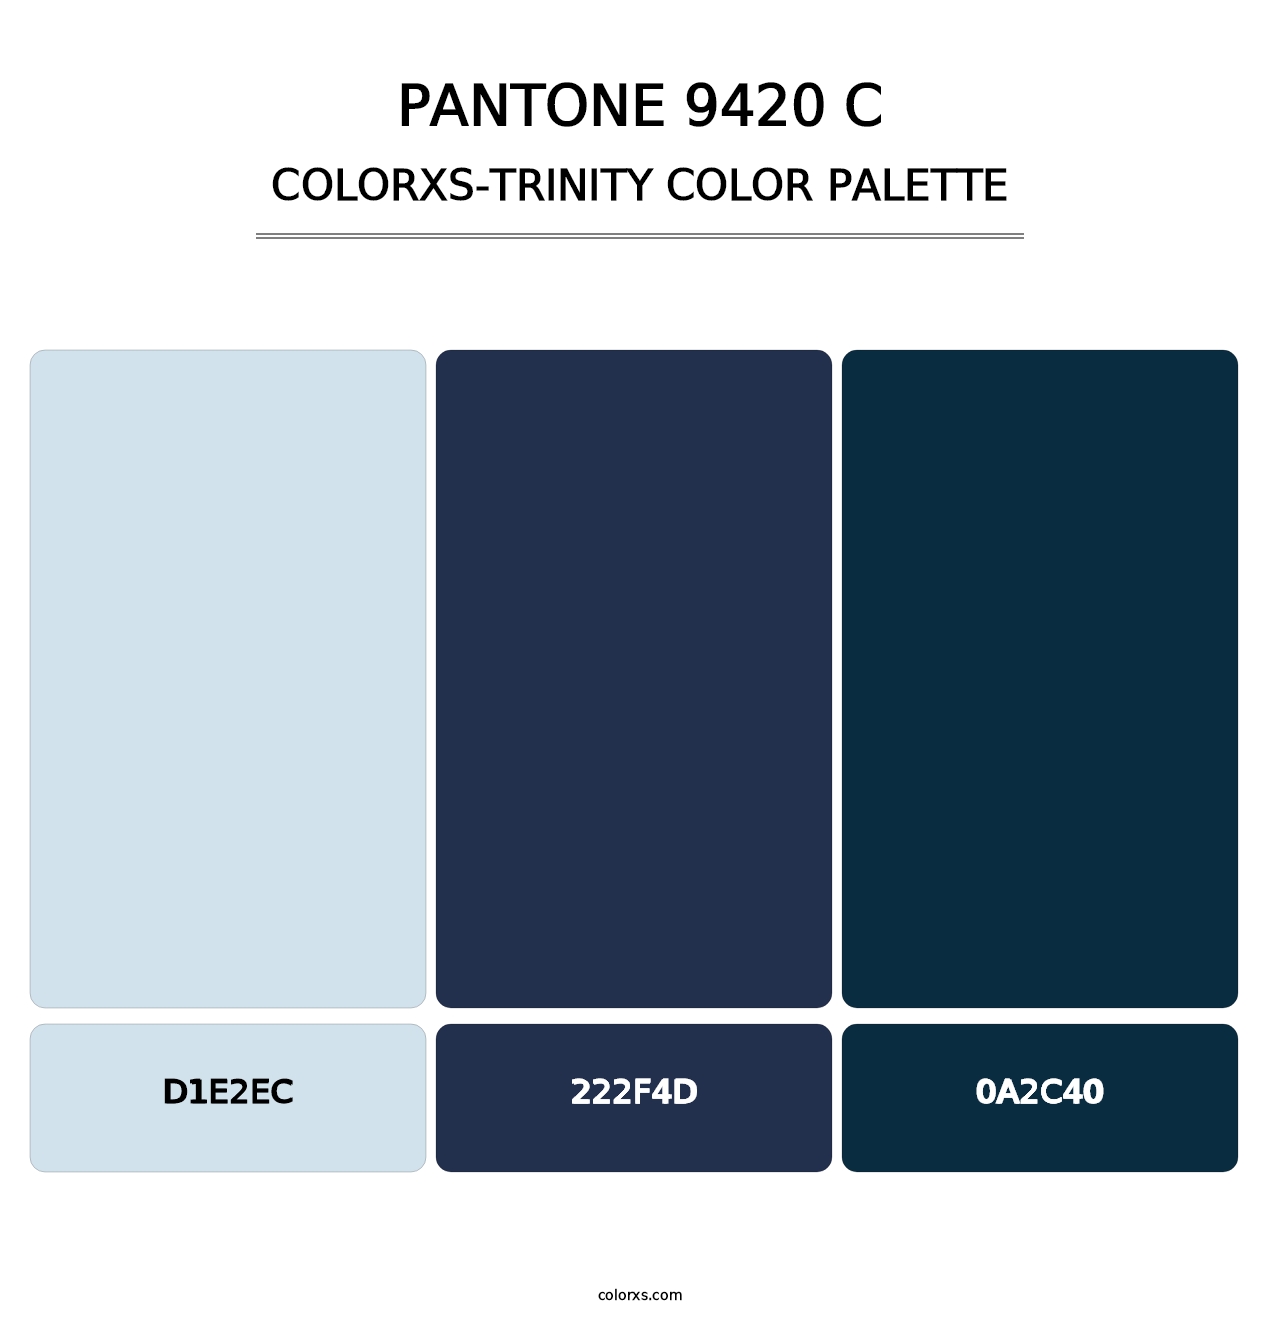 PANTONE 9420 C - Colorxs Trinity Palette